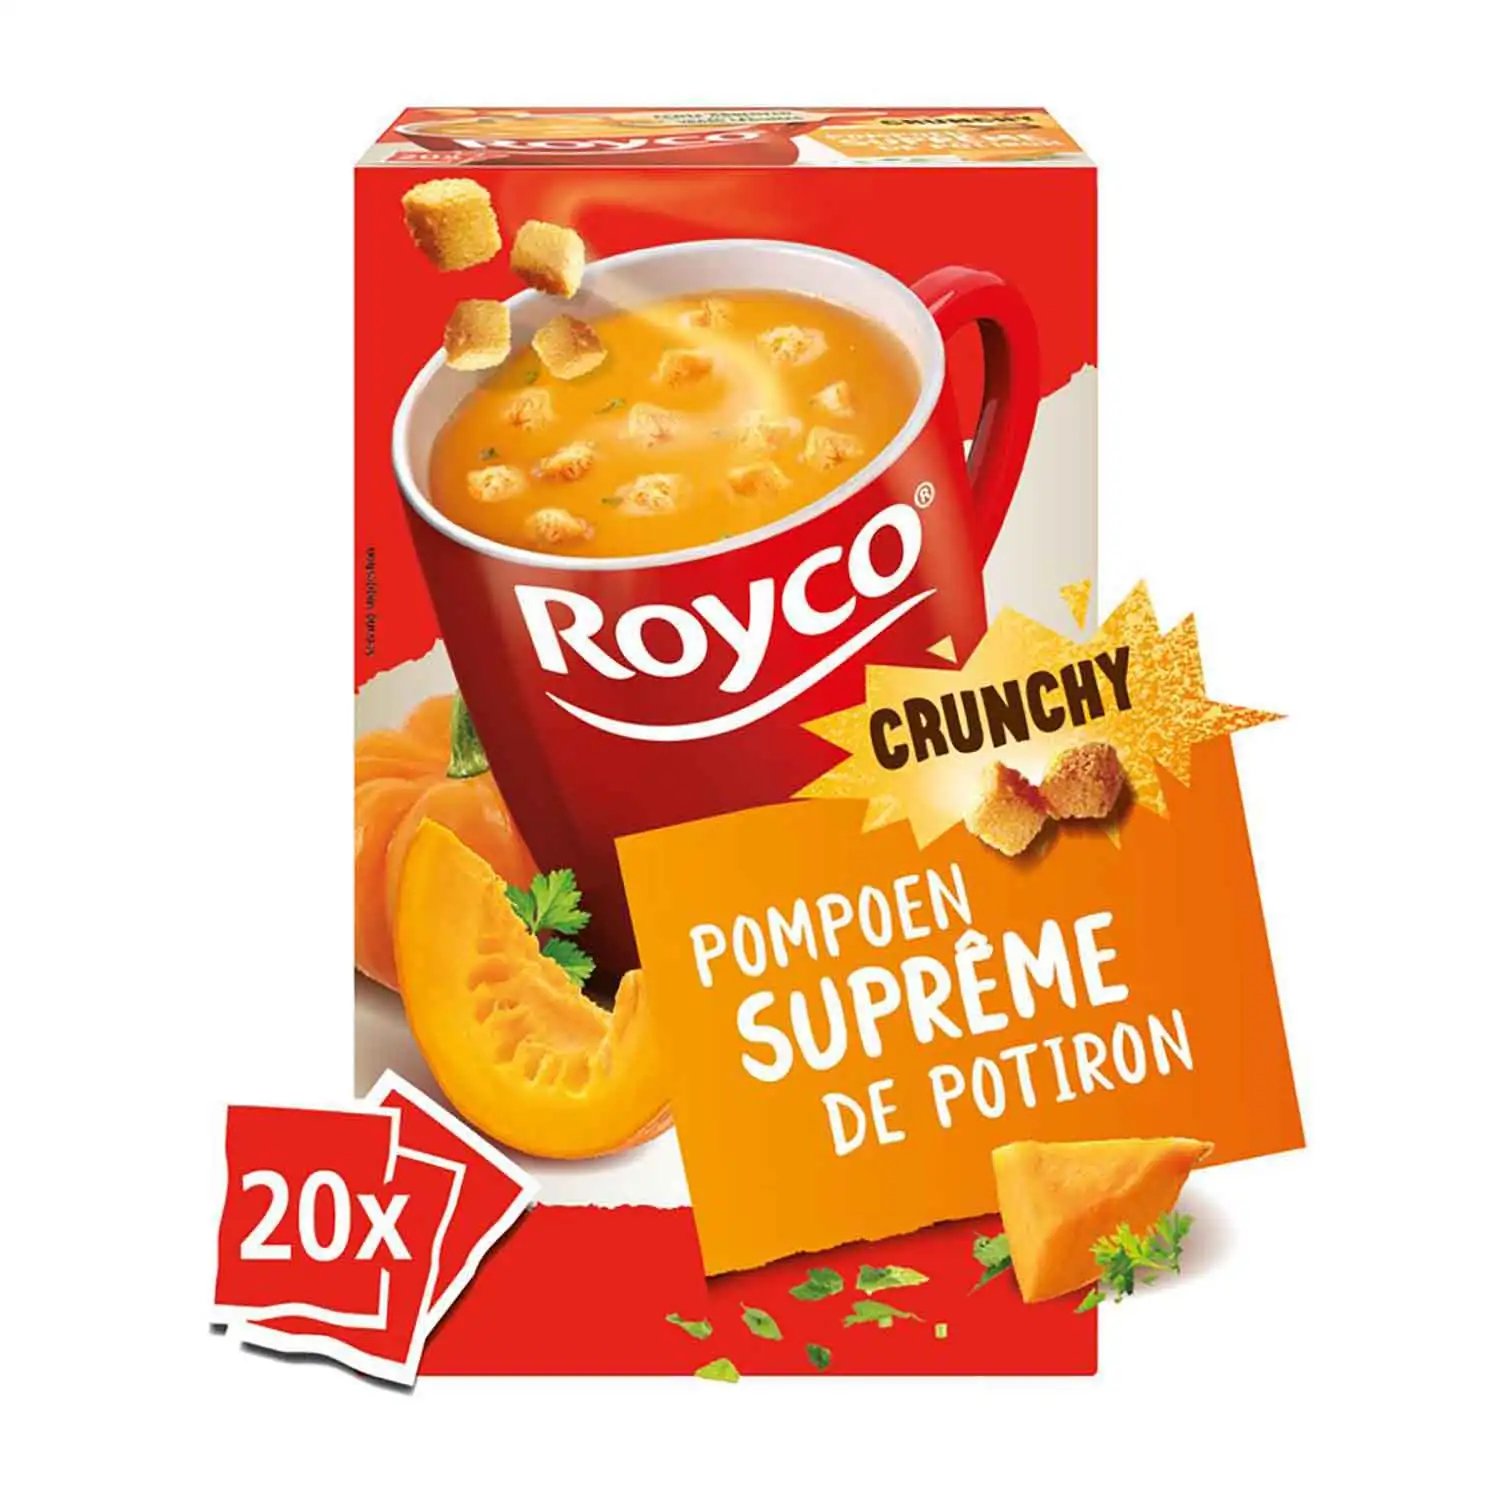 20x Royco crunchy suprême de potiron 22,5g - Buy at Real Tobacco